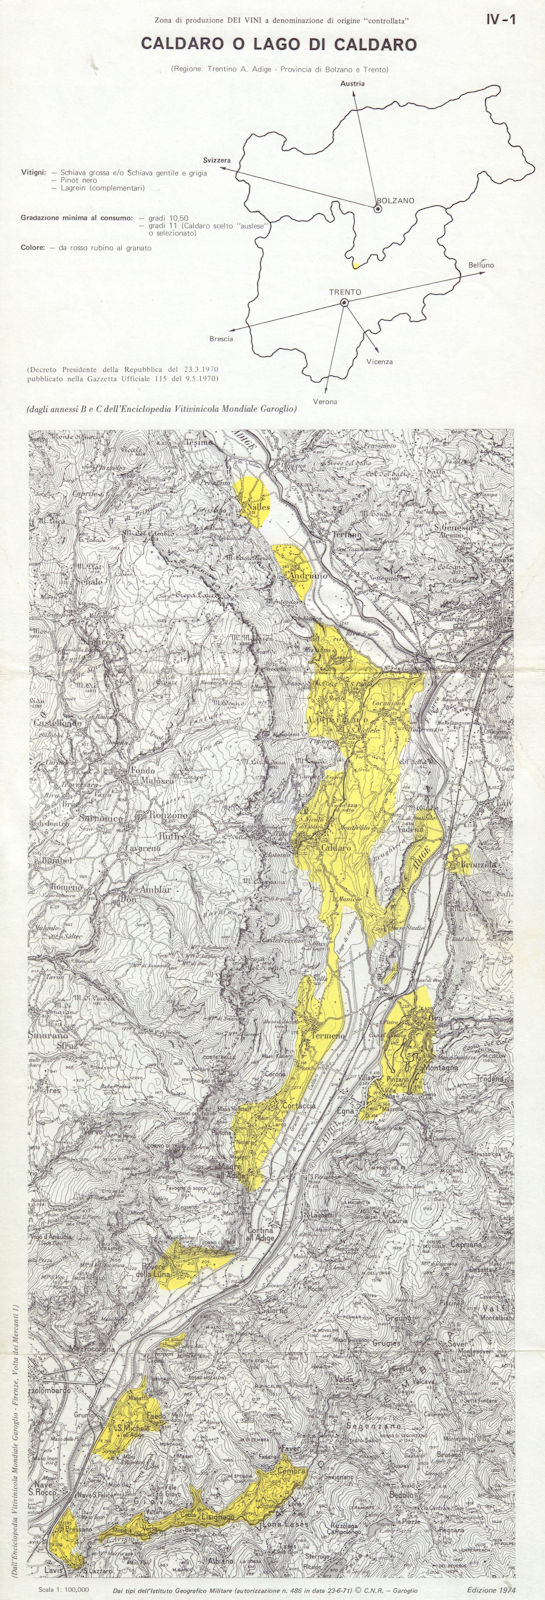 Associate Product Italy wine. Lago di Caldaro DOC. Trentino Adige Bolzano Trento 1976 old map